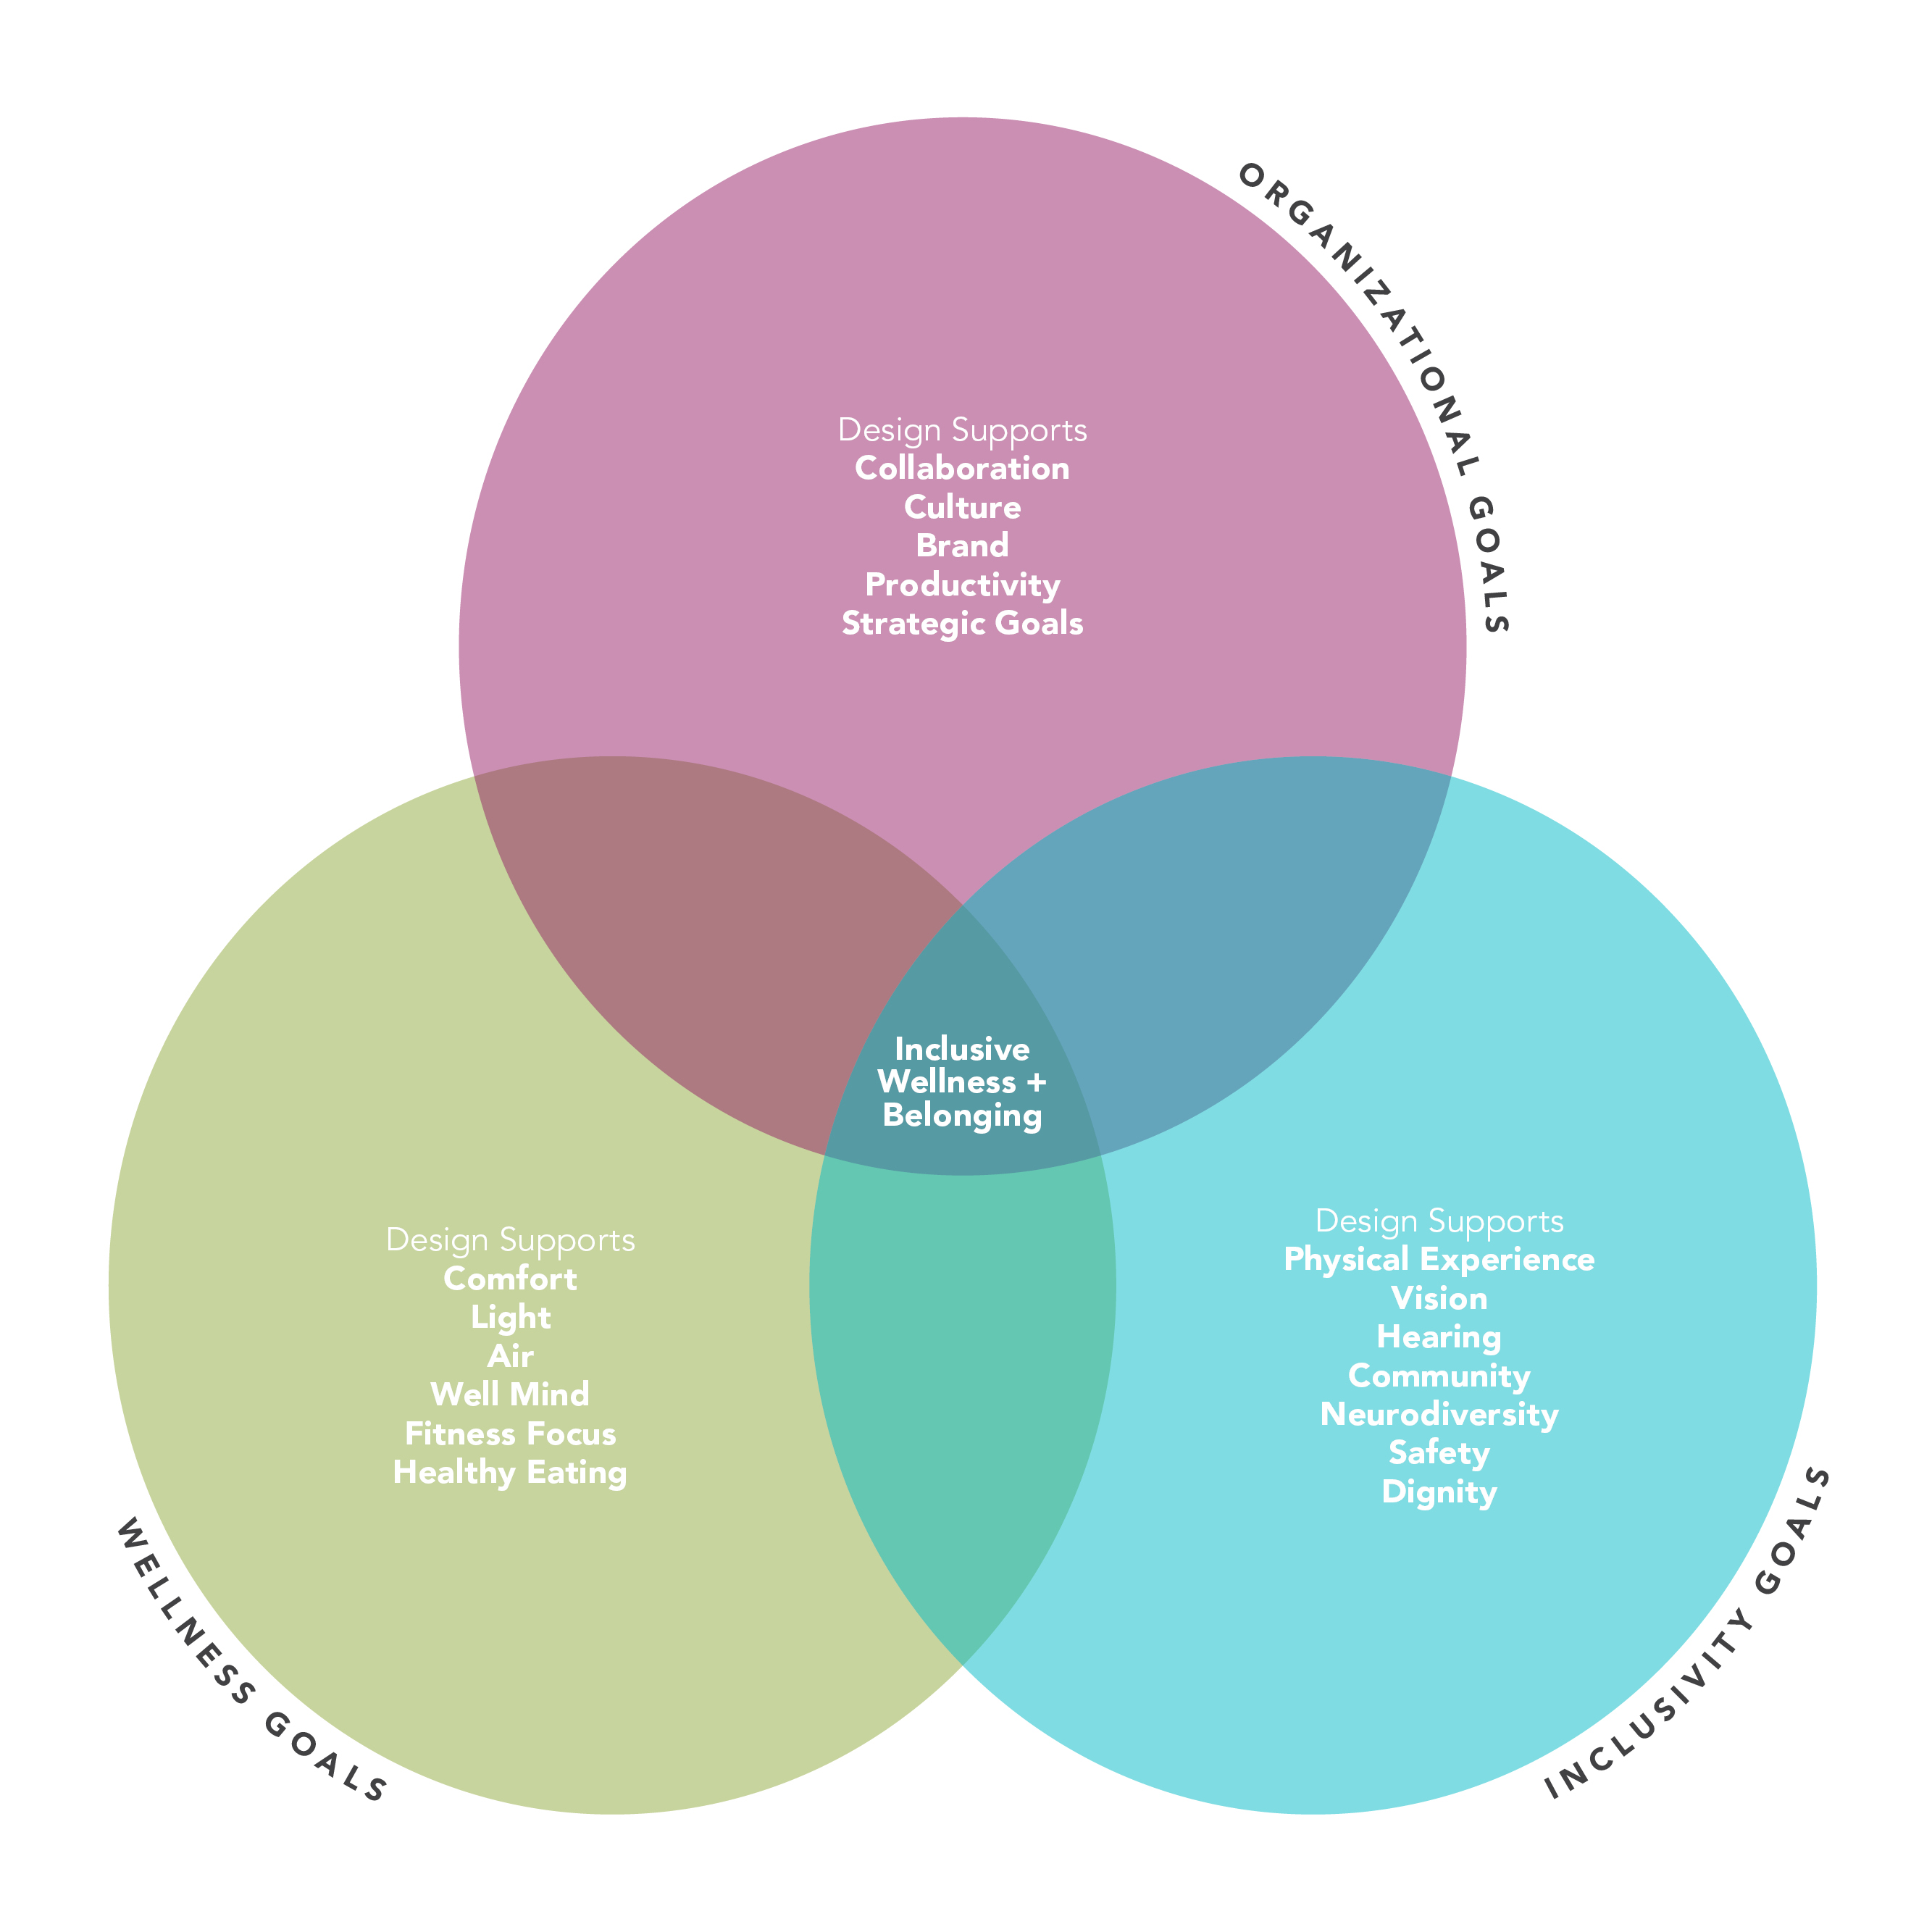 A Venn diagram with three circles labeled "Organizational Goals," "Inclusivity Goals," and "Wellness Goals." At the center is "Inclusive Wellness + Belonging."